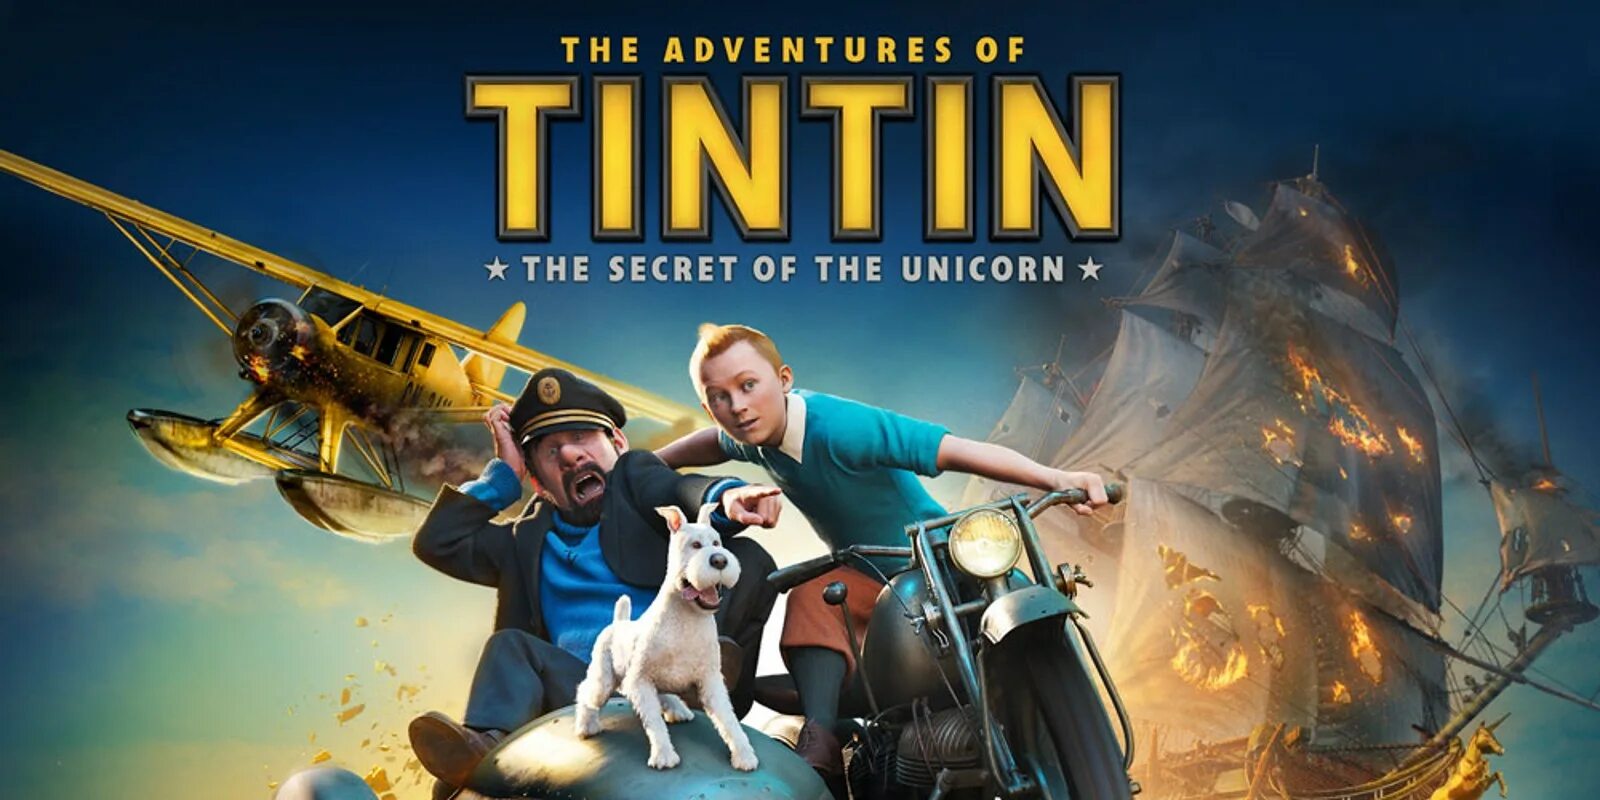 Тин тин 1 часть. Приключения Тинтина 1. Тим тим и тайна единорога. Приключения Тин Тин тайна единорога. Приключения Тинтина: тайна единорога (2011/II).